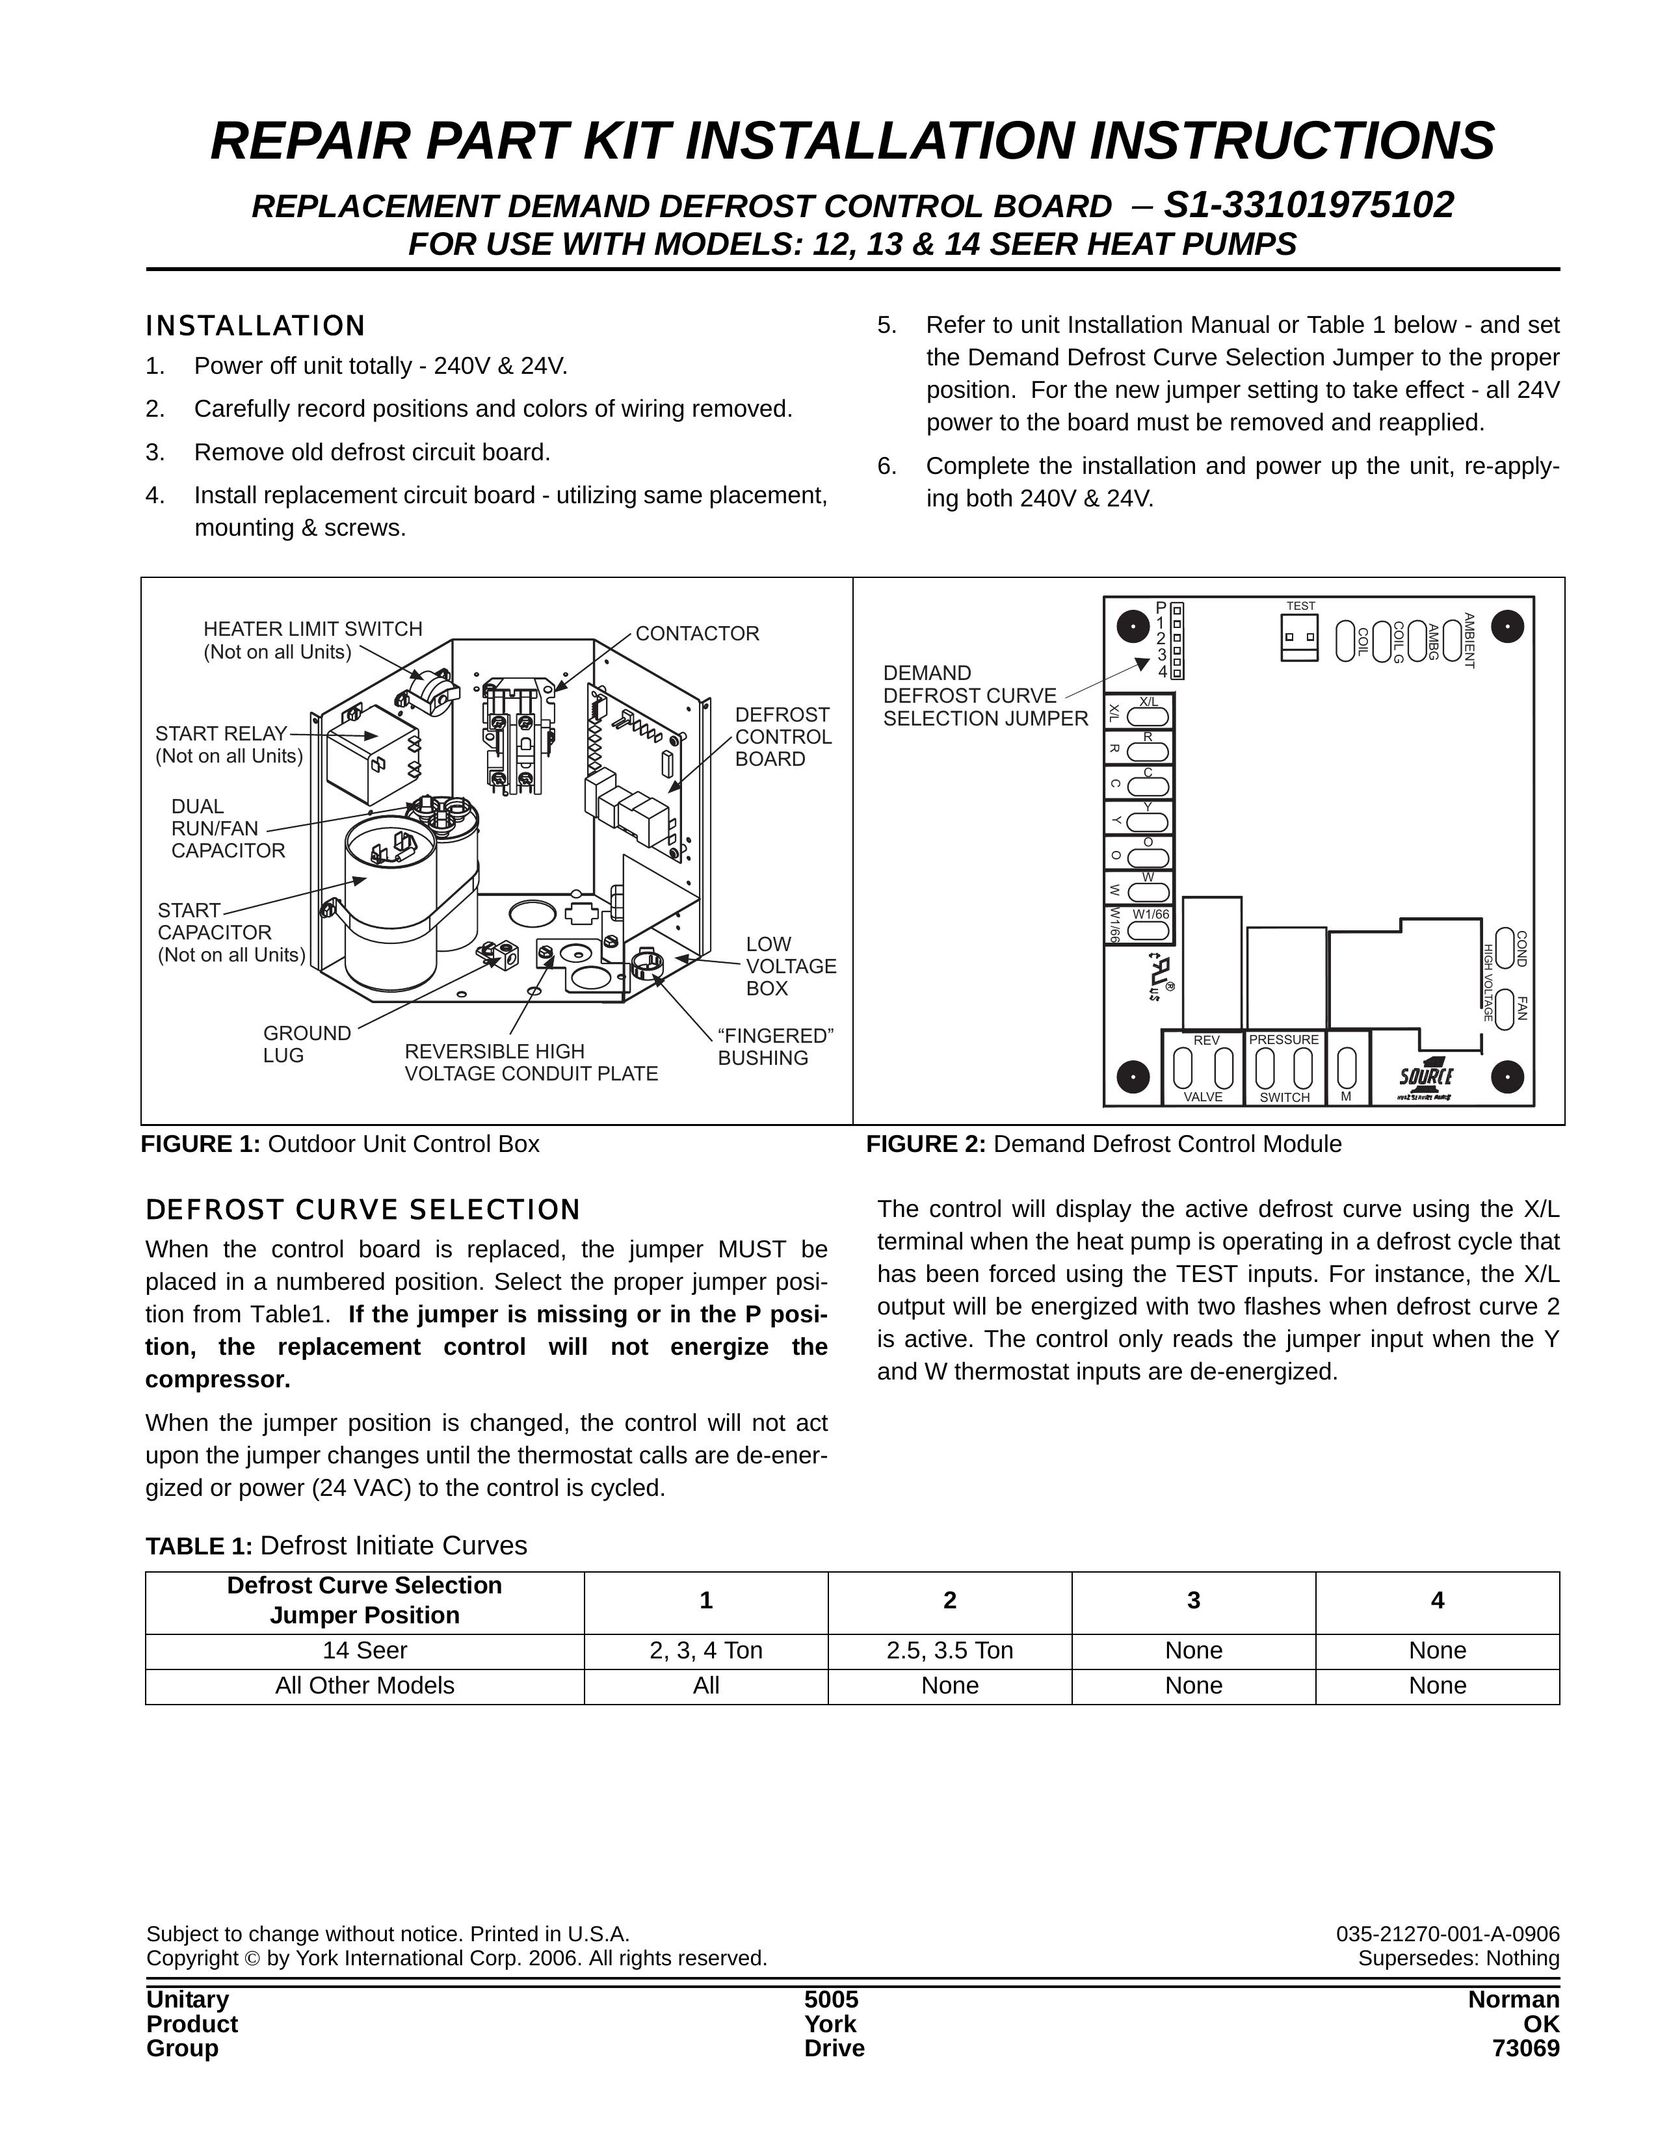 York S1-33101975102 Heat Pump User Manual